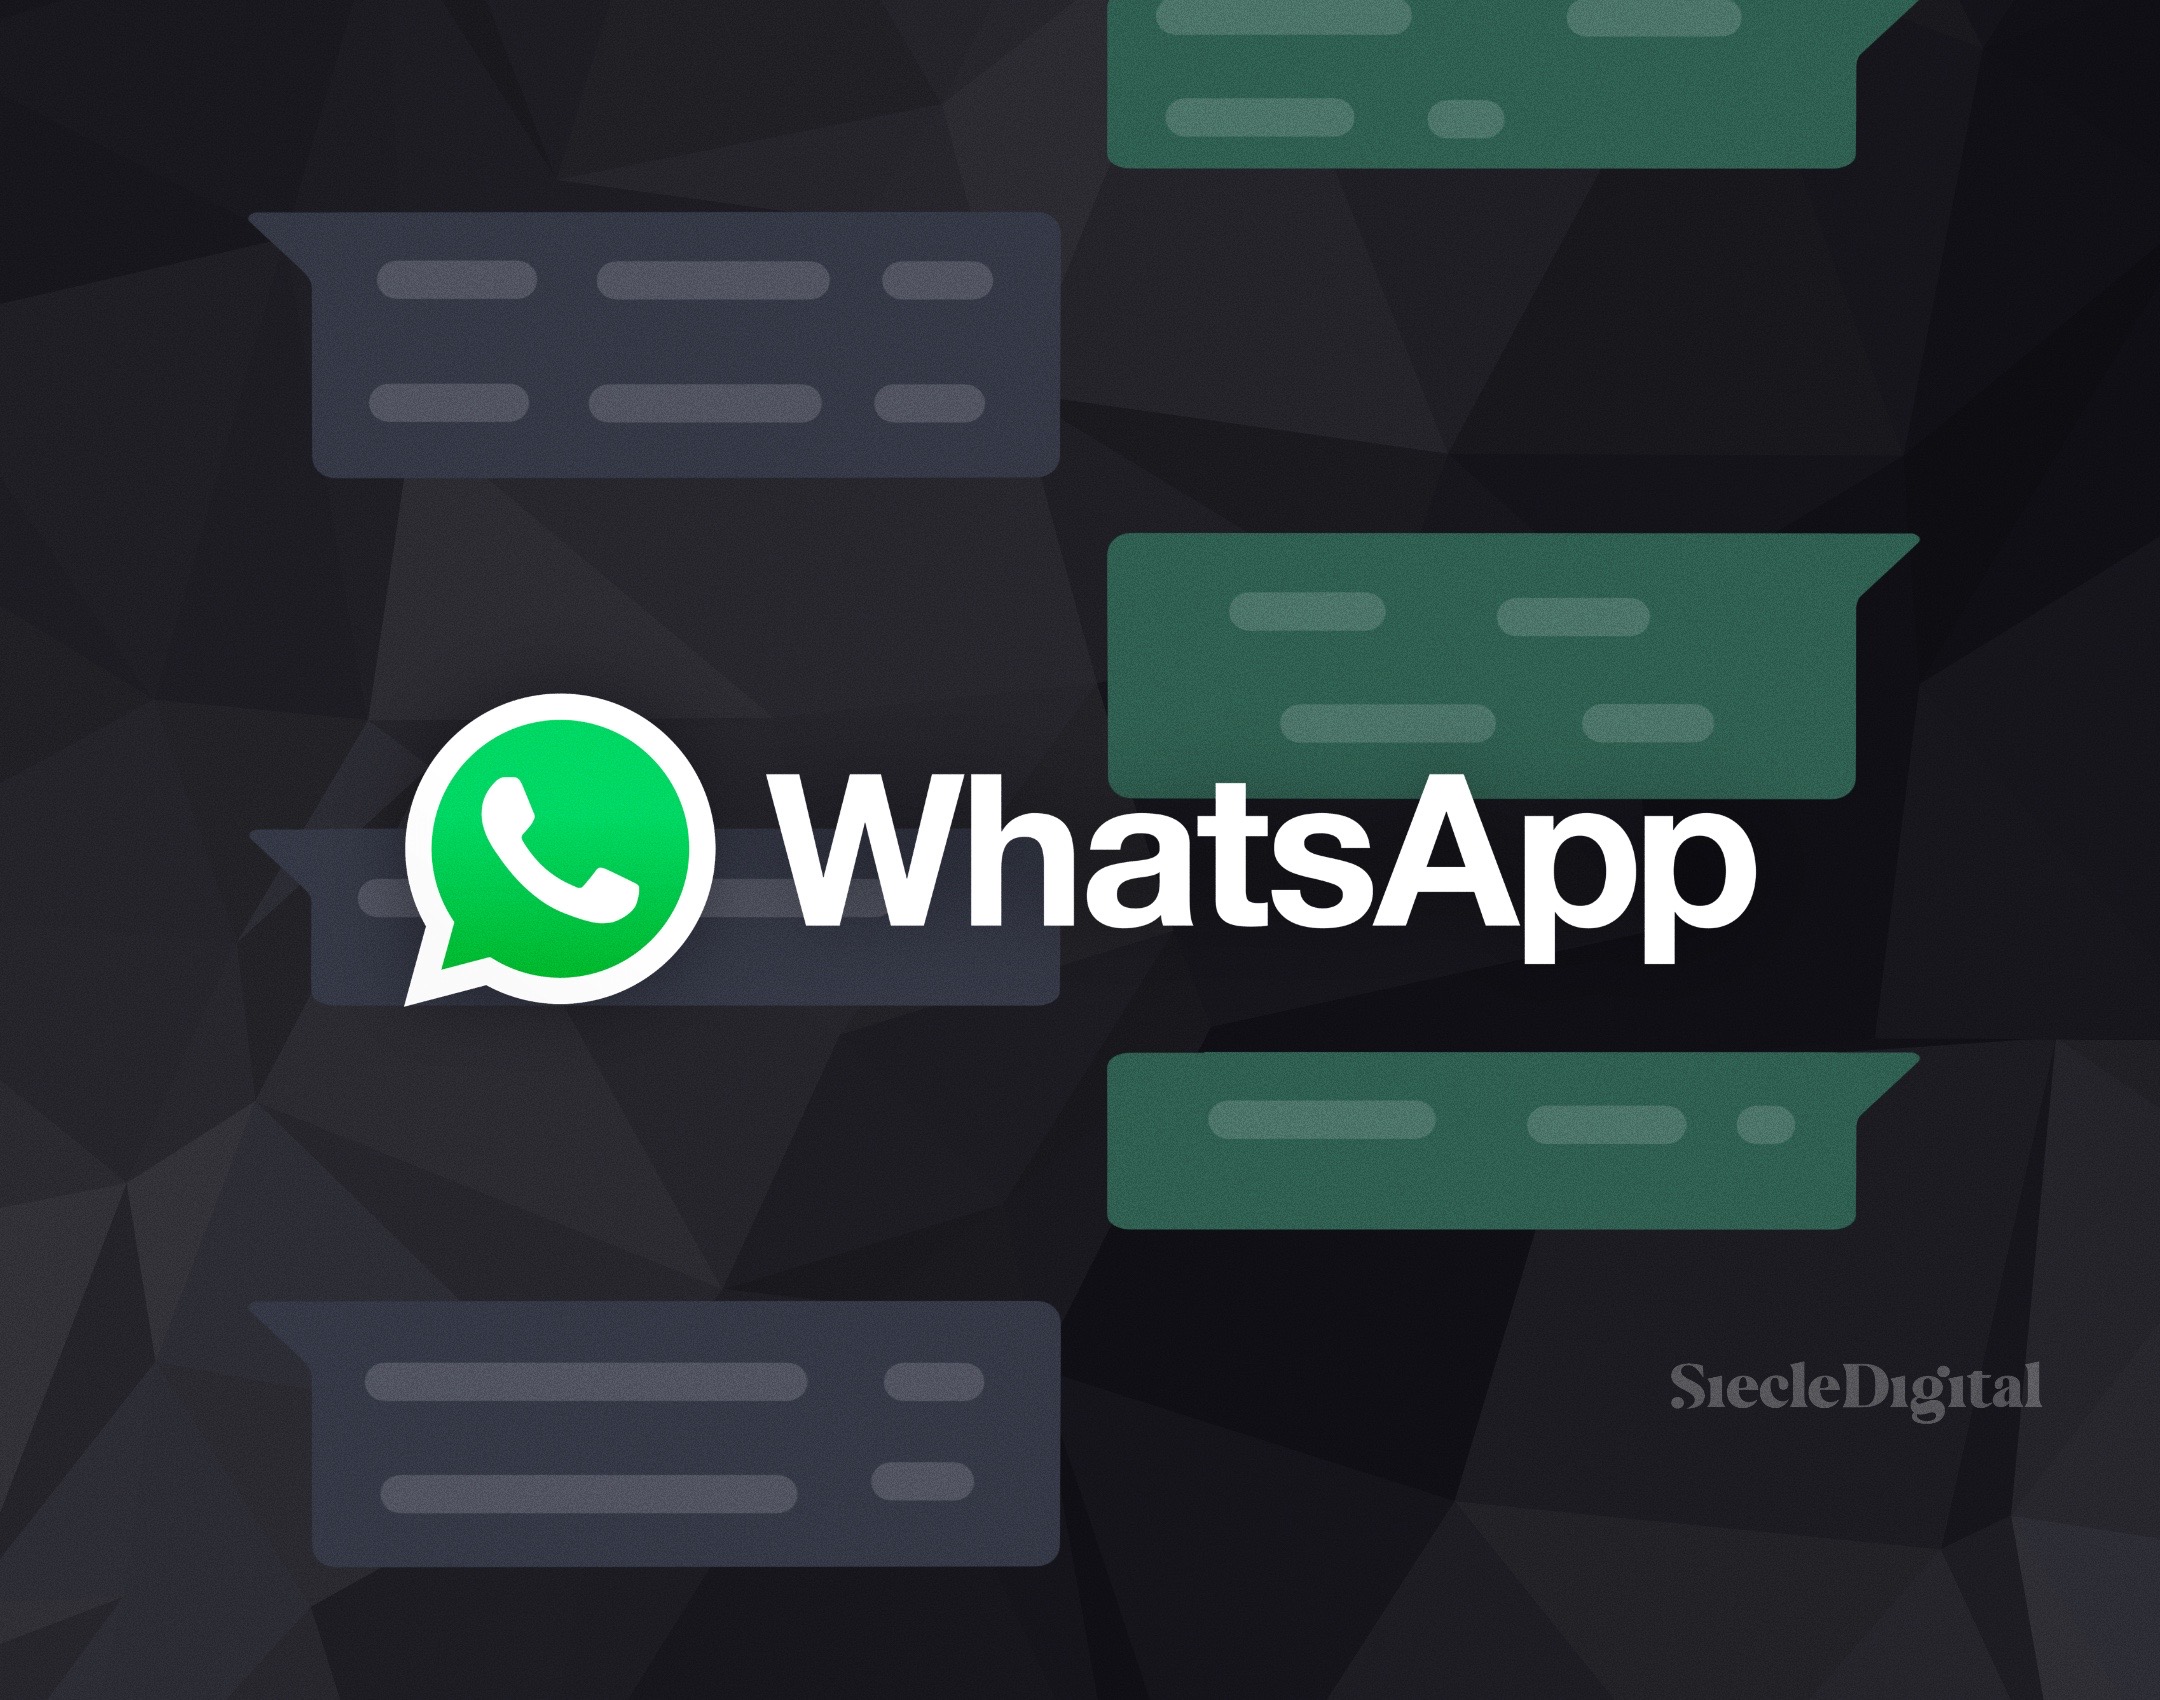 whatsapp app logo illustration